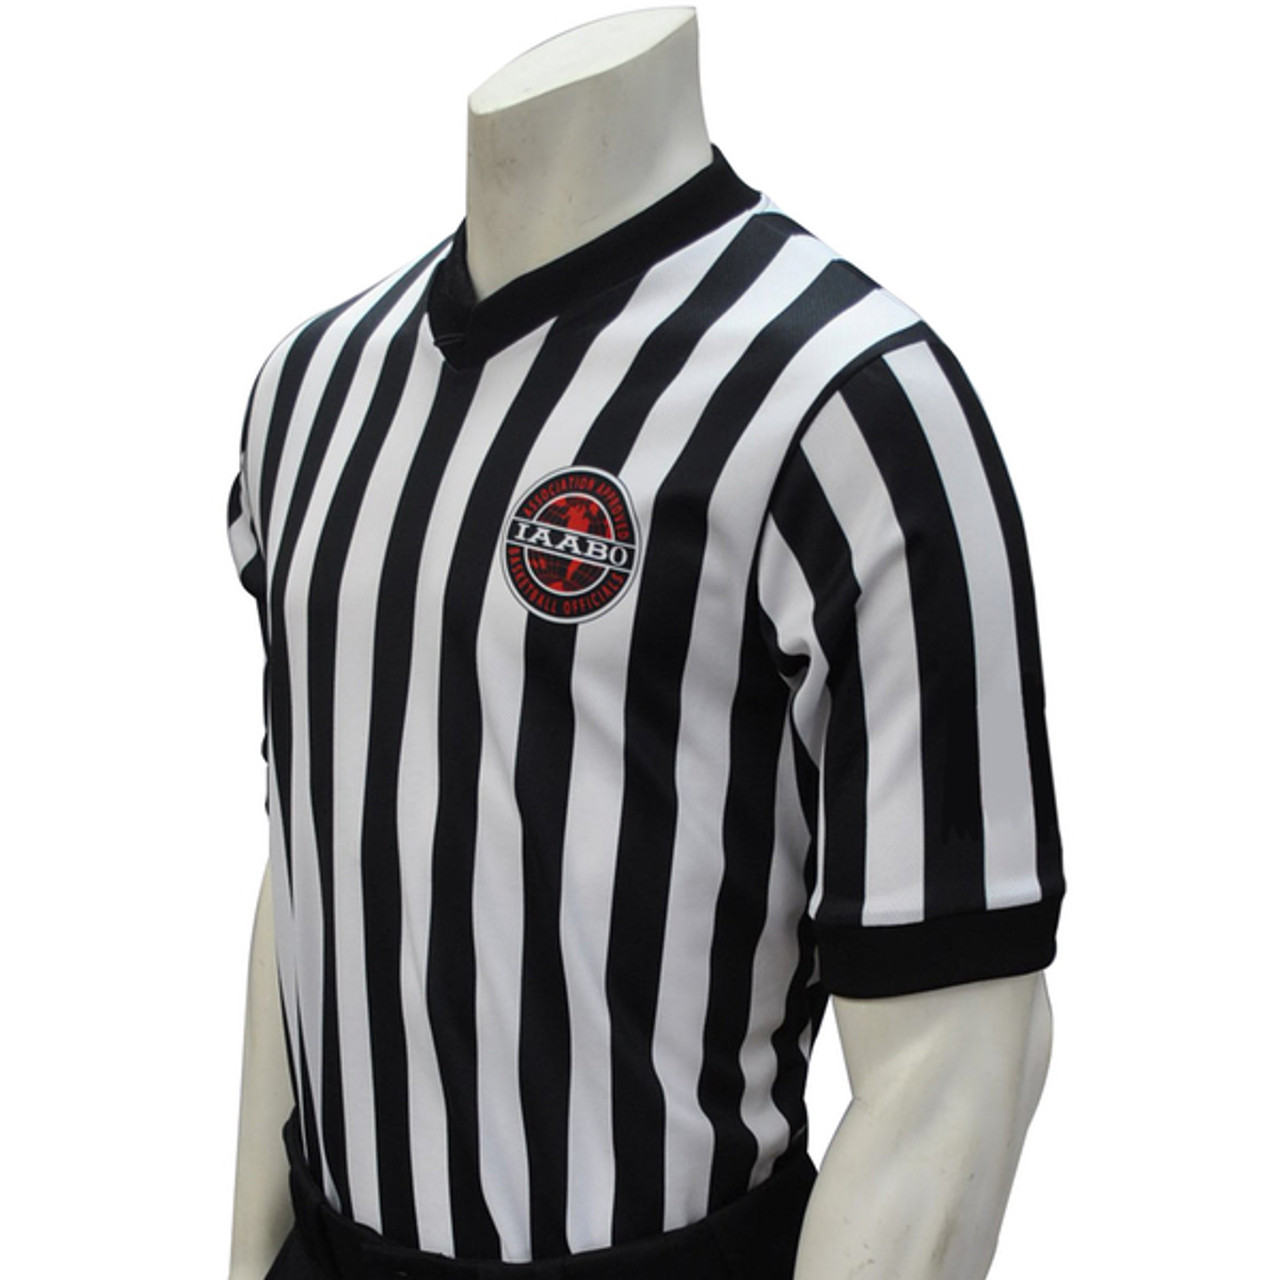  Women Official Referee Jerseys Shirt Black & White